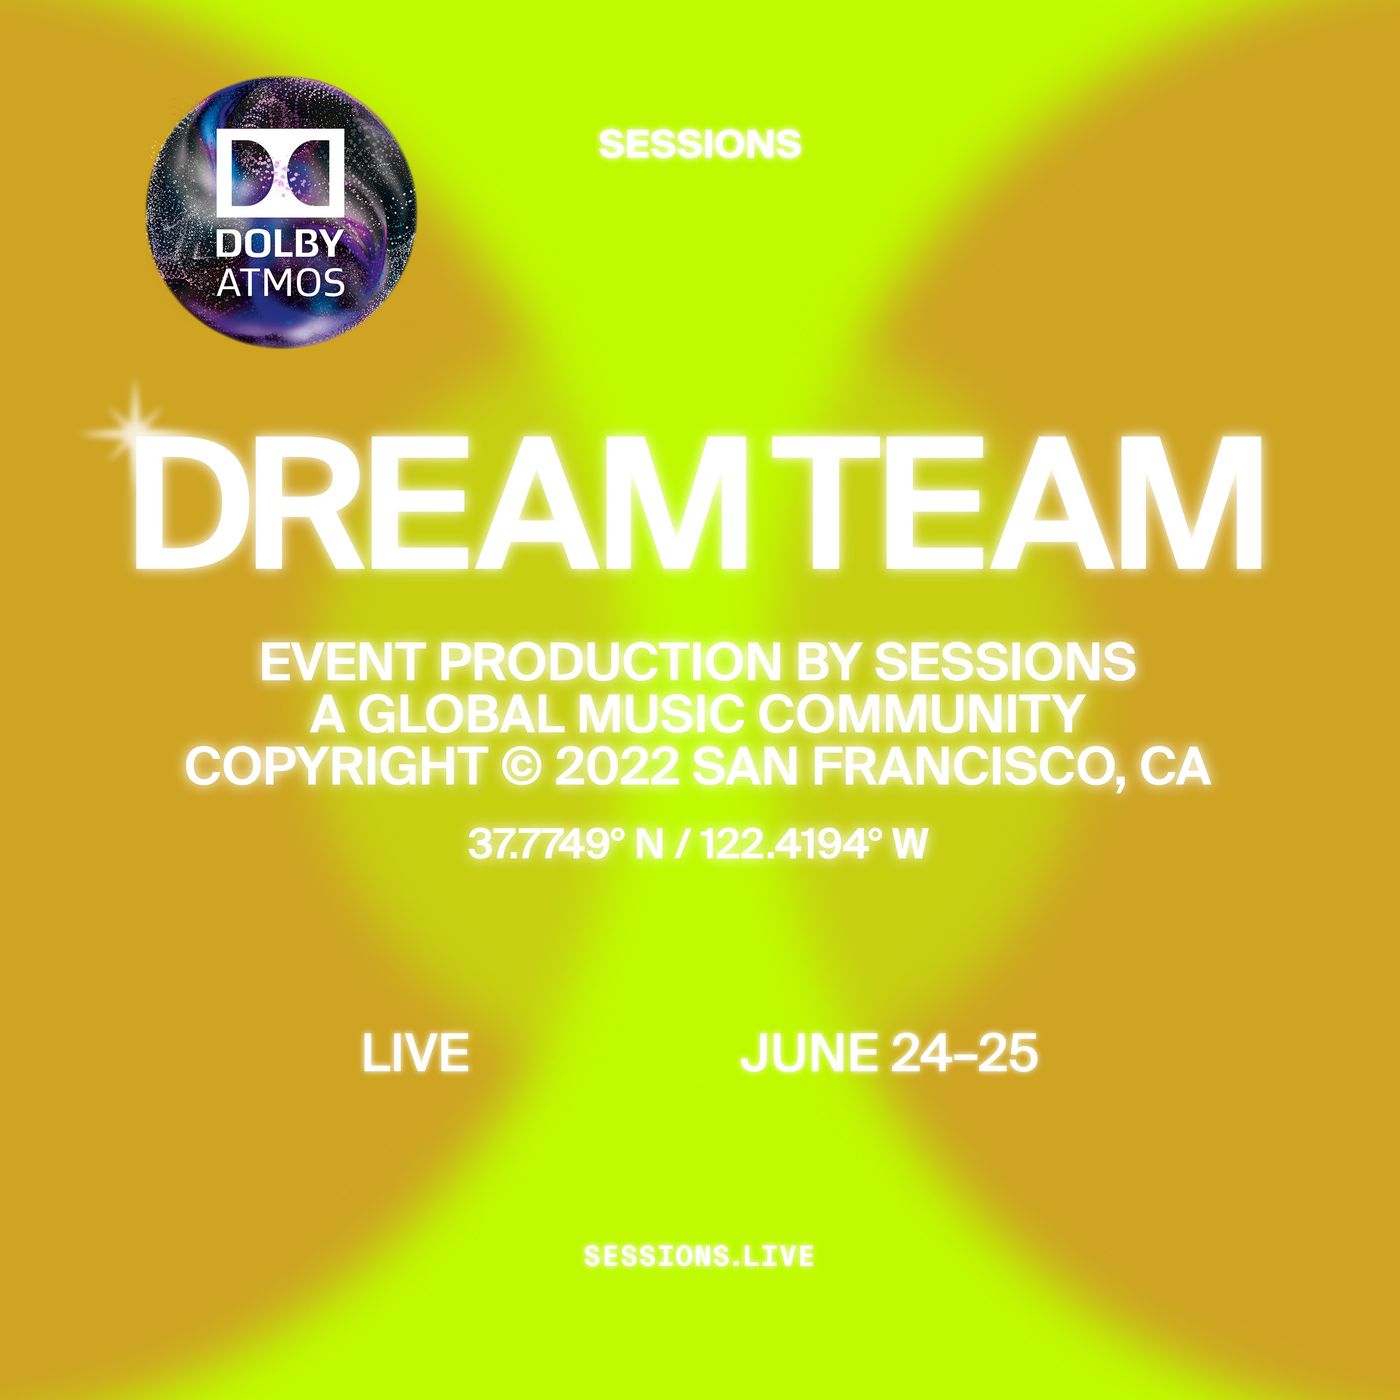 080 3HITSMIXED - DREAM TEAM FESTIVAL (Week 3) Alex Ubago For SessionsLive